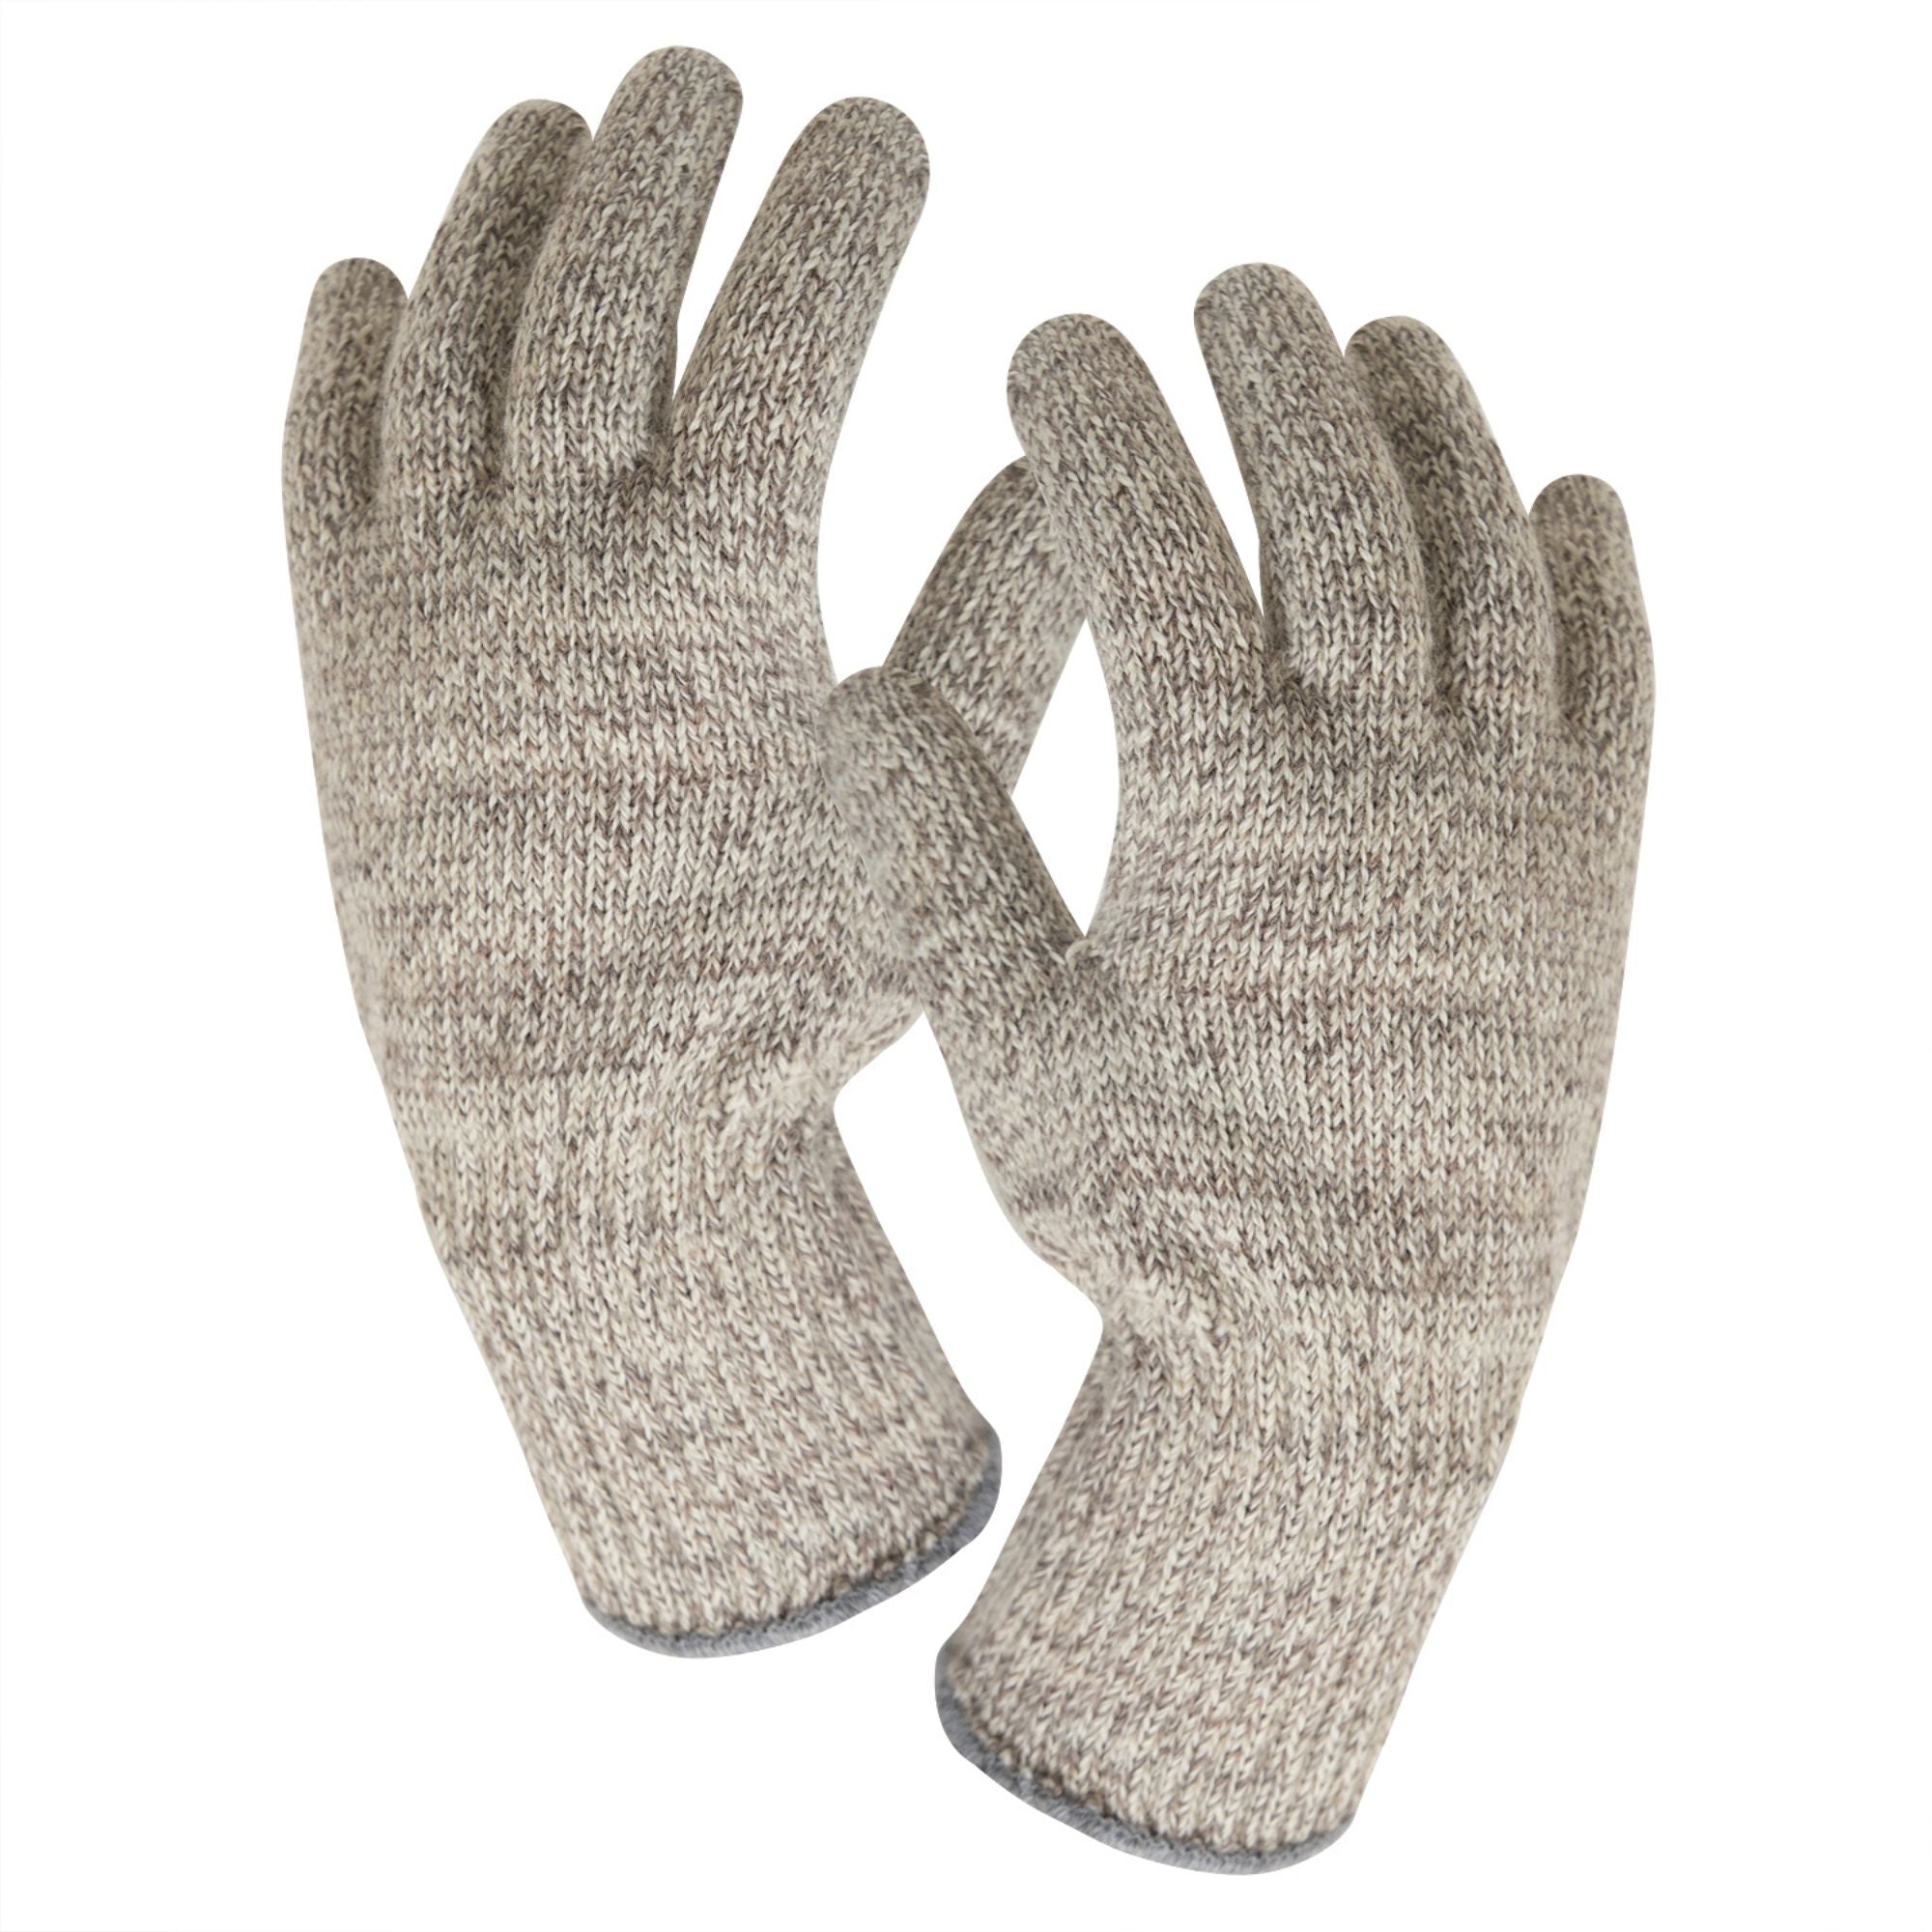 Ragg - Outdoor Winter Gloves - Wool Nylon USA Made